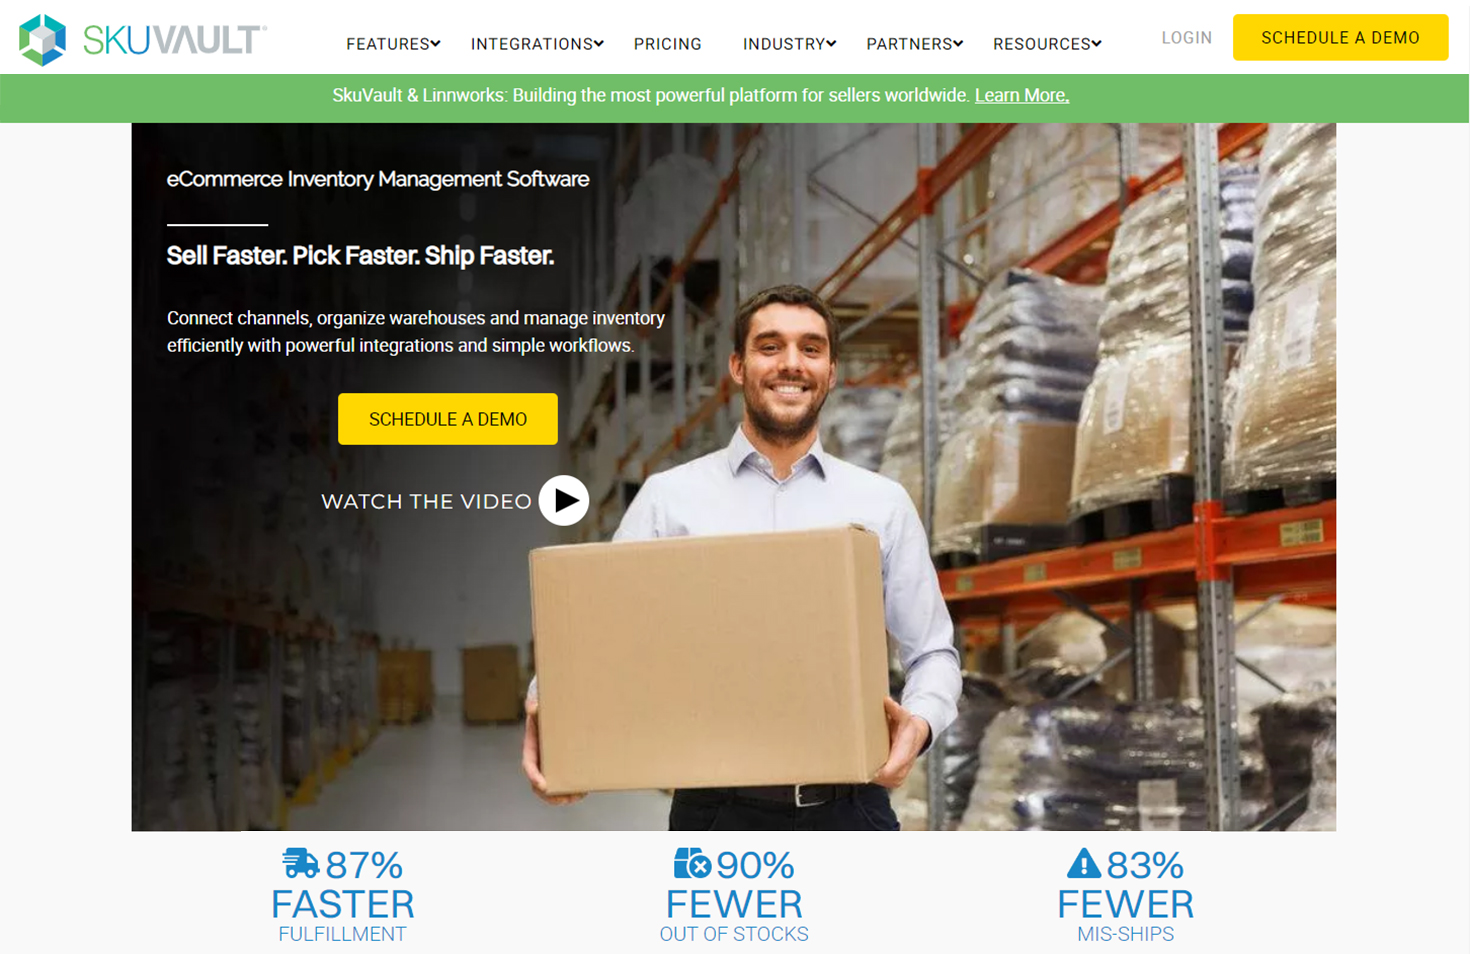 SKUVAULT eCommerce Inventory Management Software